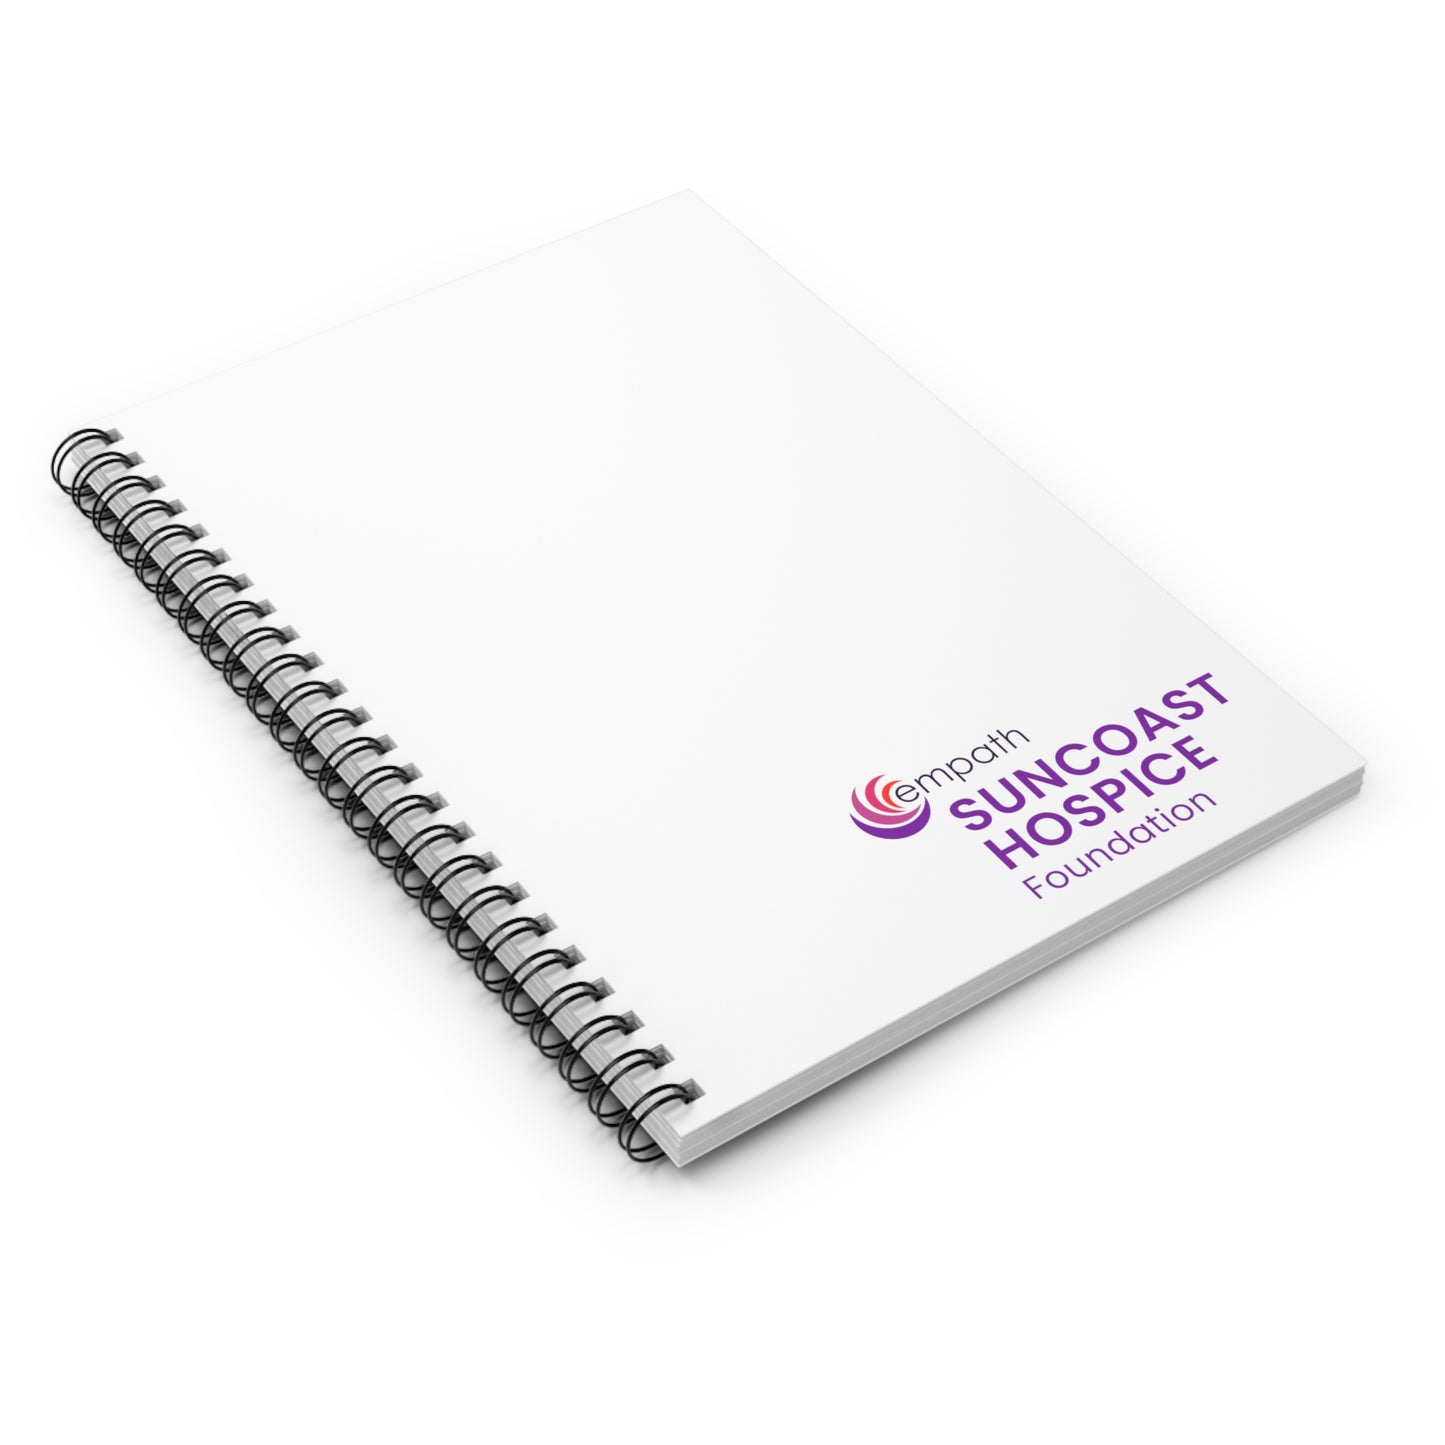 Spiral Notebook (ruled line) - Suncoast Foundation